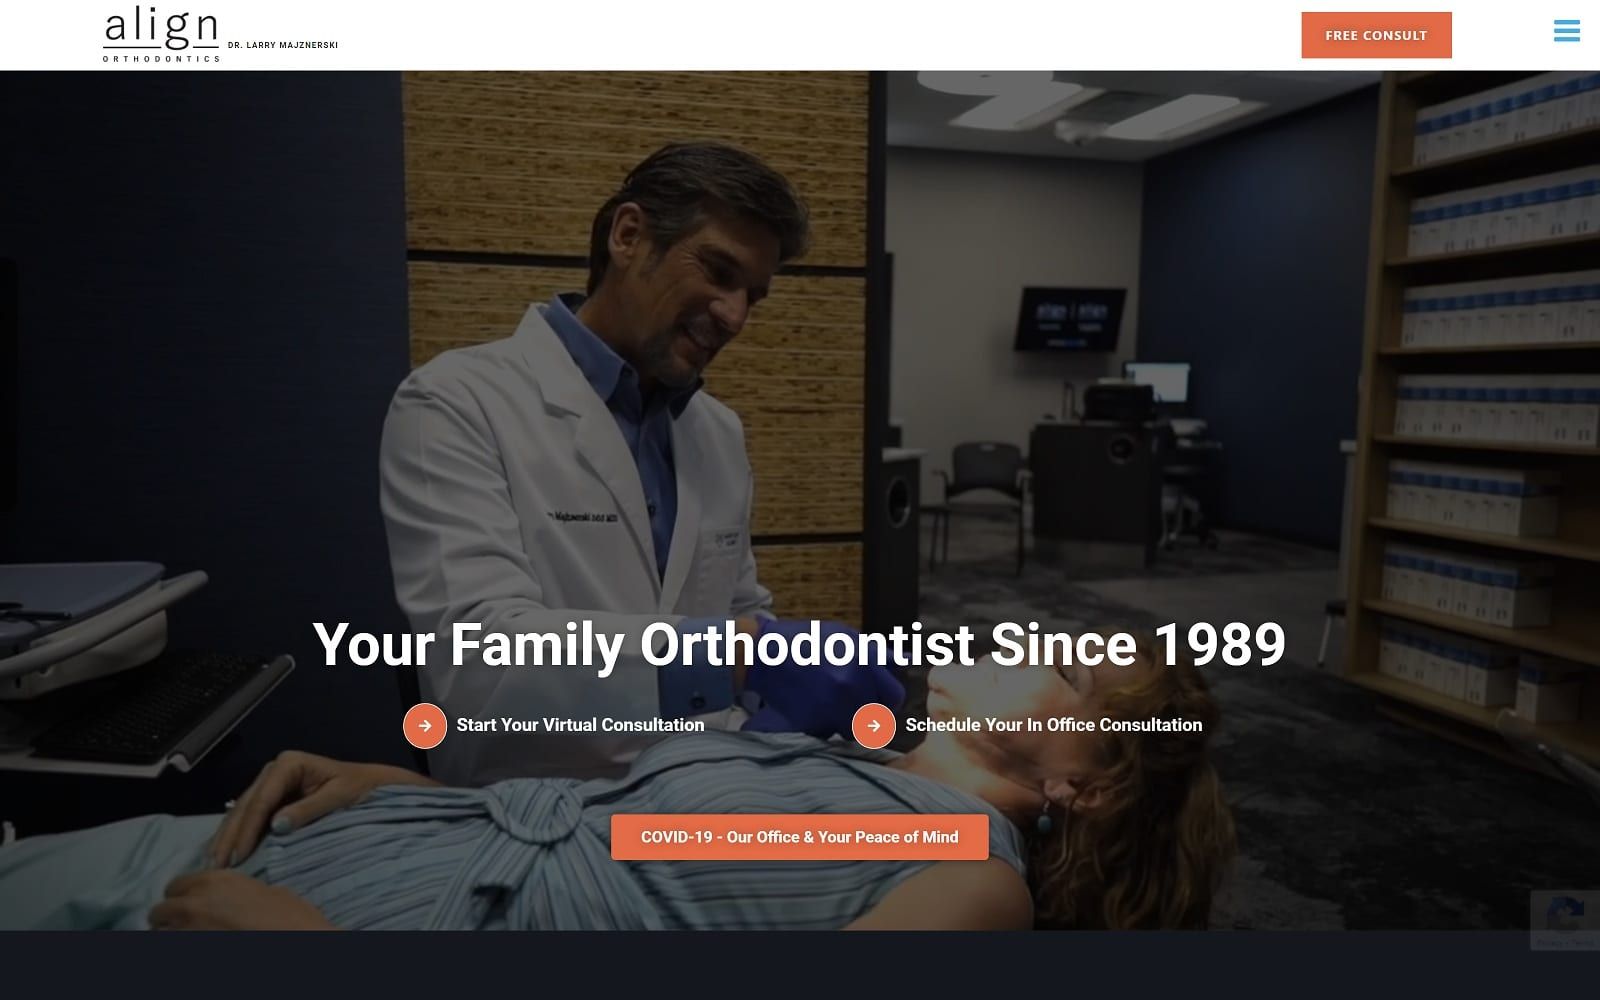 The screenshot of larry majznerski dds, msd - align orthodontics smilesbydrm. Com website